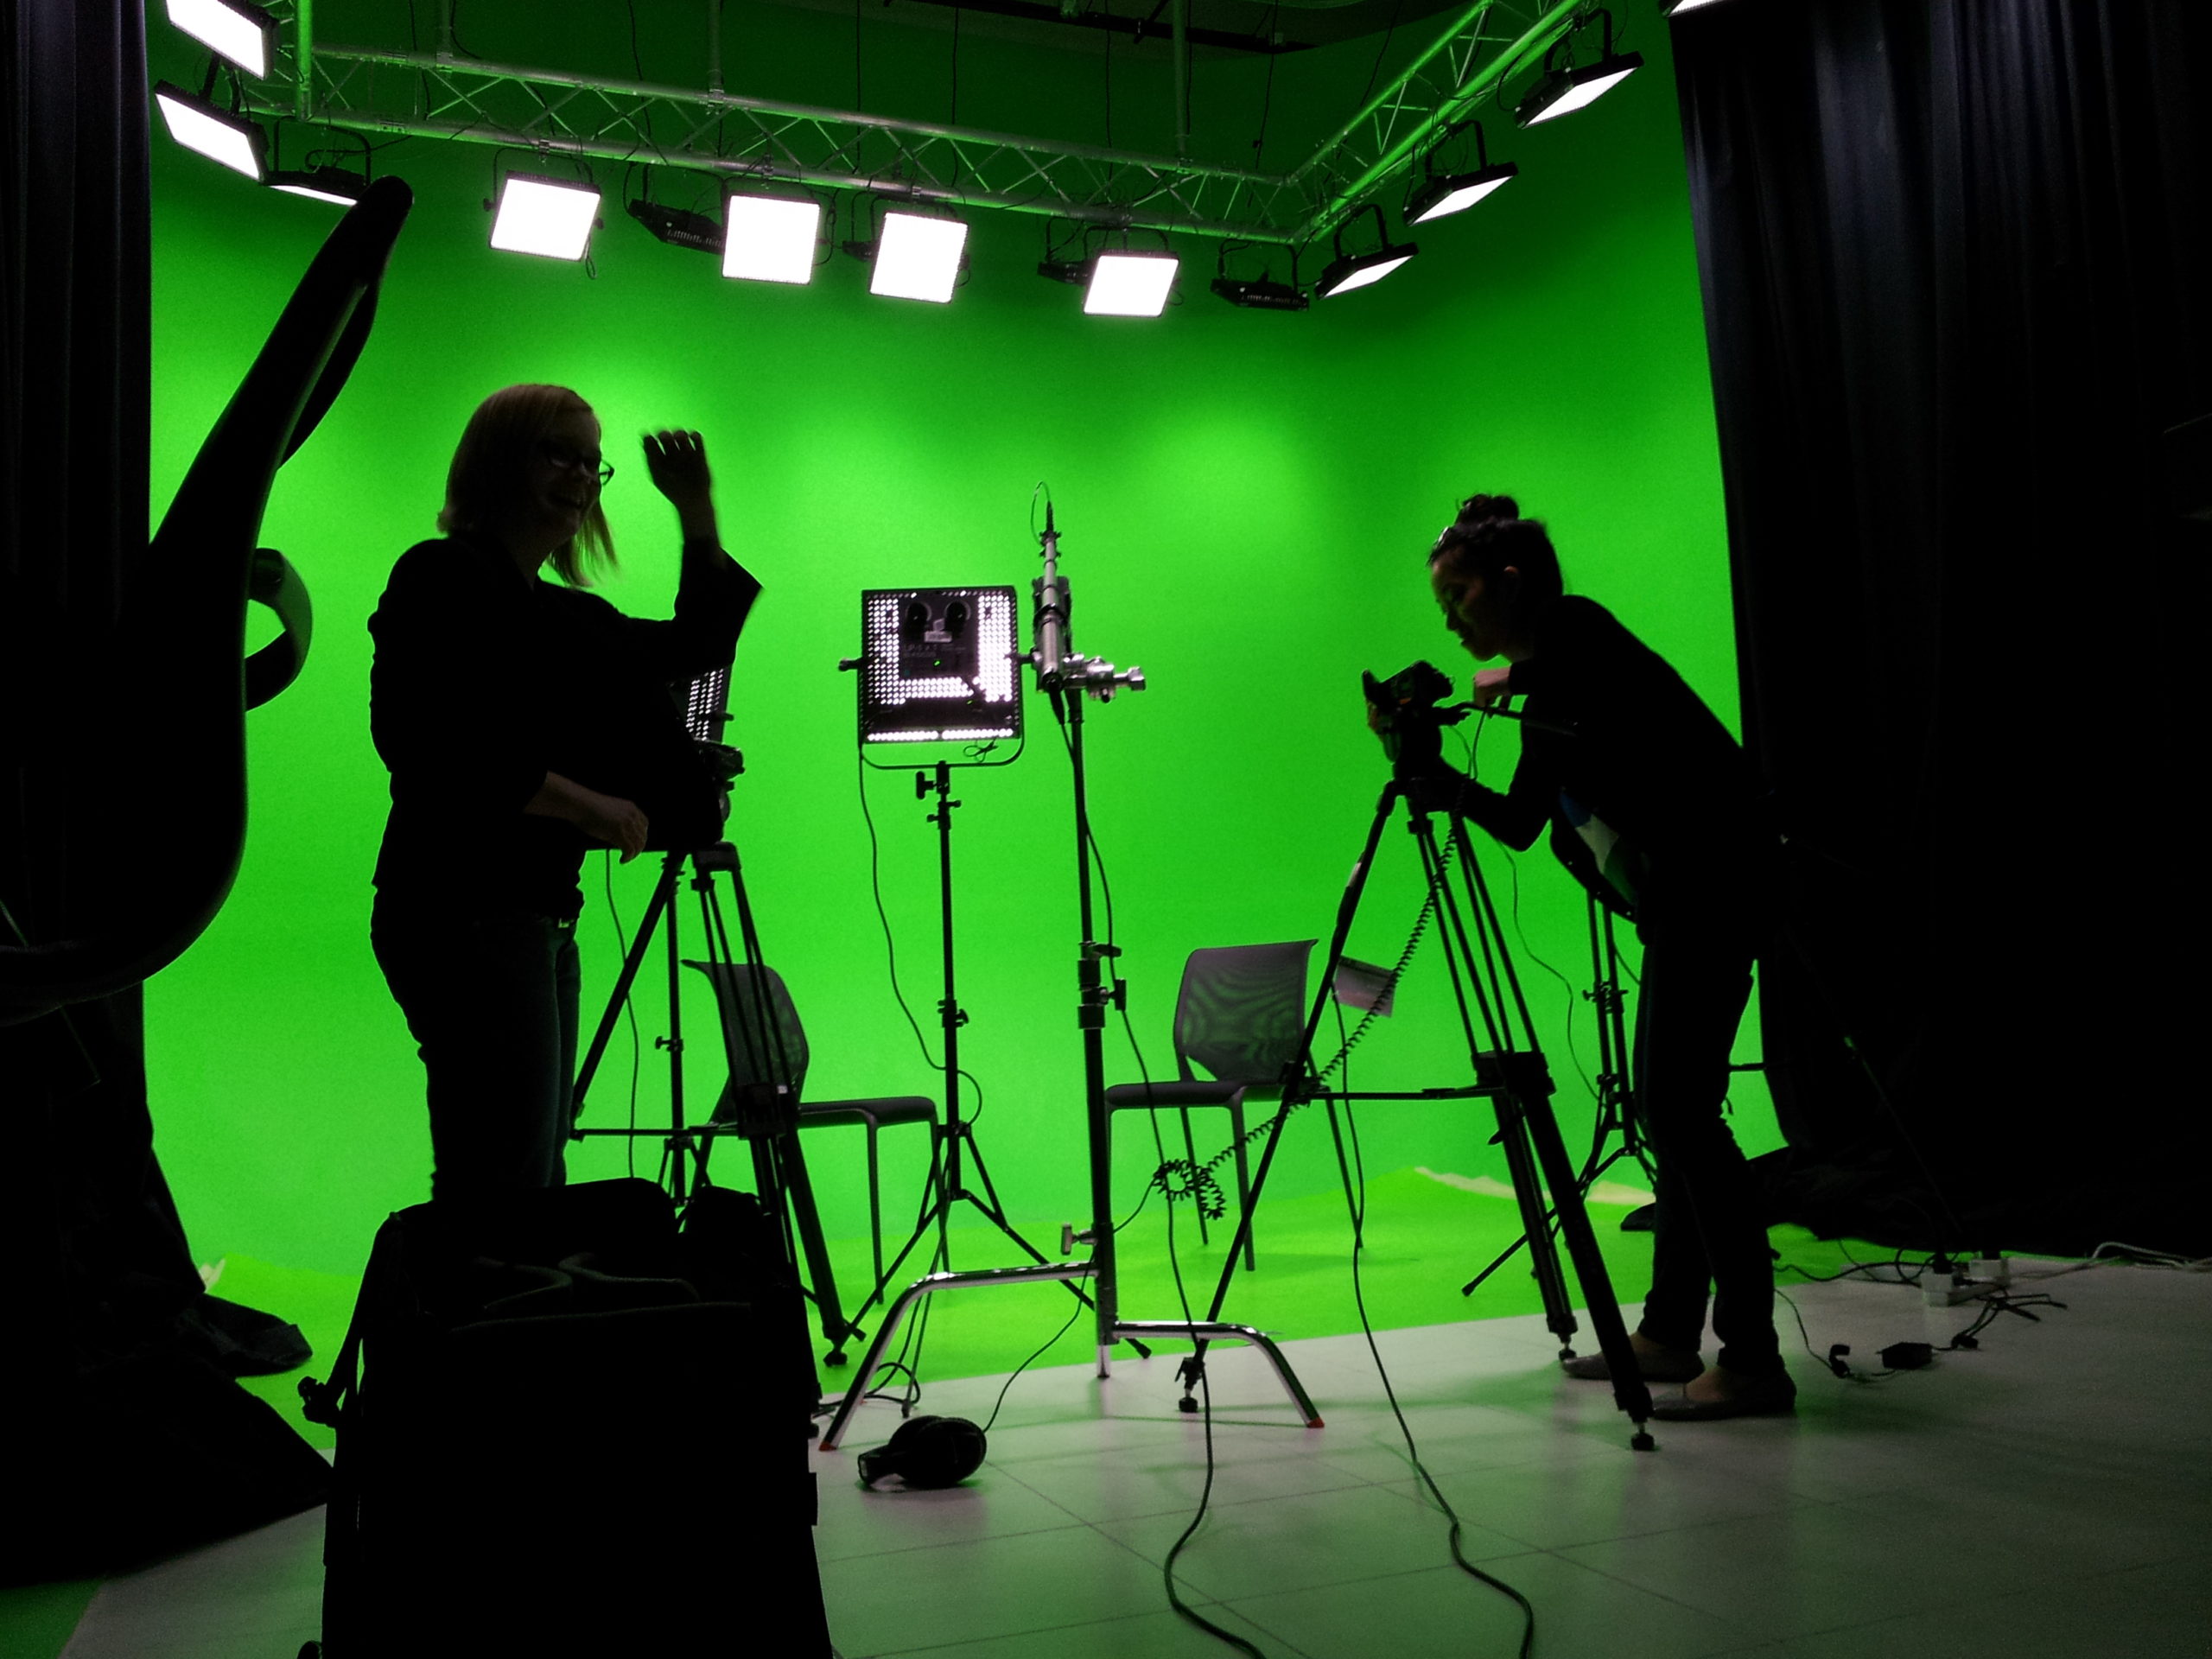 Открой видео на телевизоре. Студия для съемок. Студия для видеосъемок. Хромакей студия. Зелёный фон для съёмки.